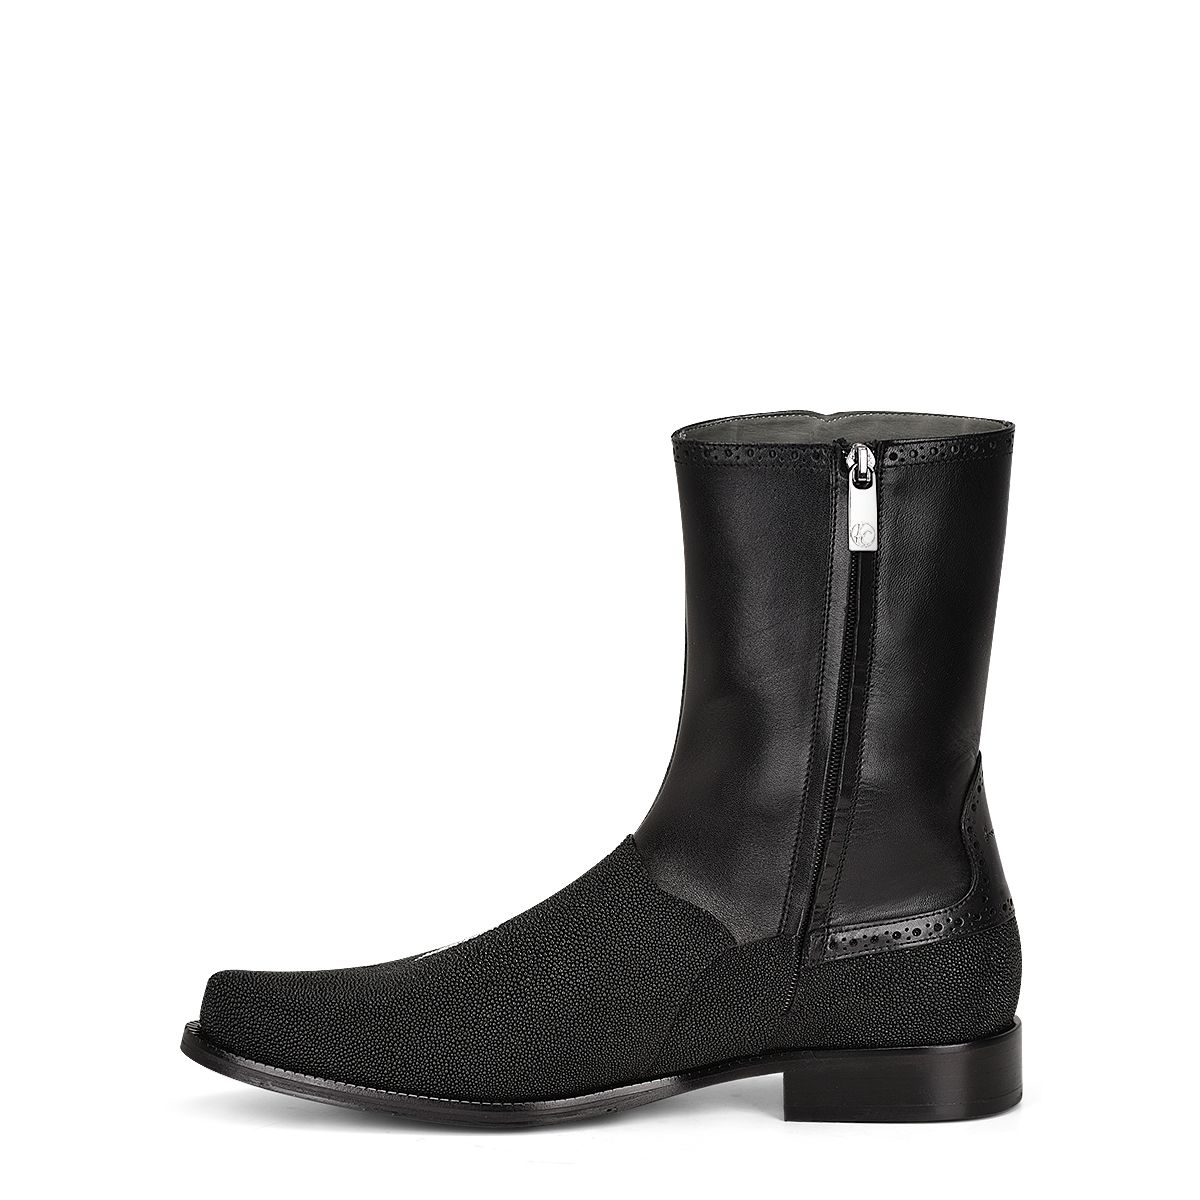 827MTTS - Franco Cuadra black dress casual stingray skin ankle boots for men-Kuet.us